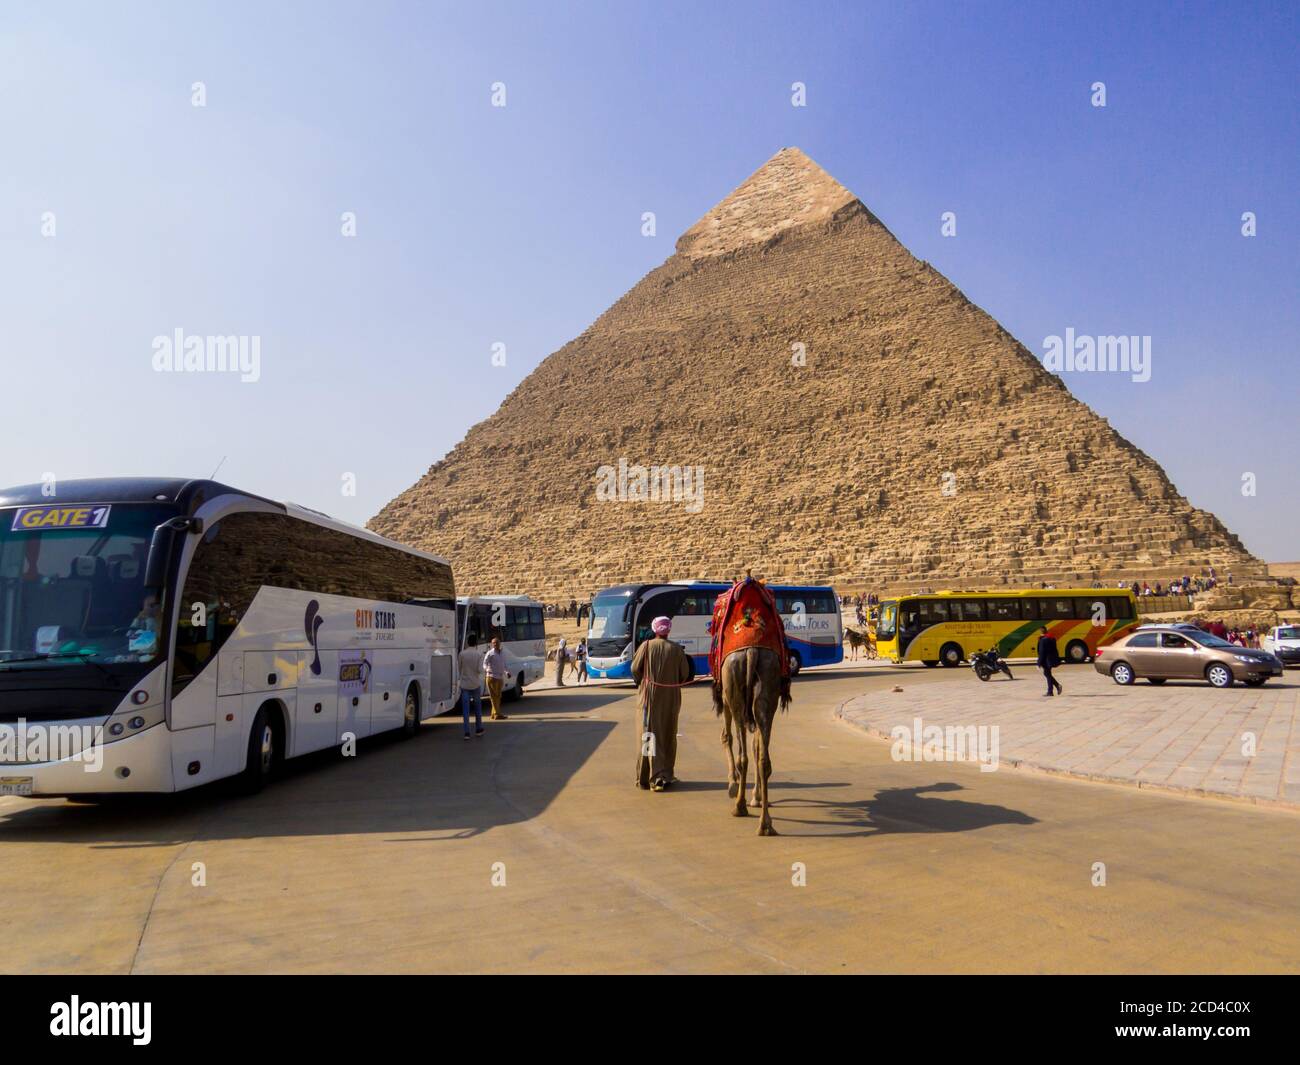 Pyramid of Khafre, Giza, Egypt Stock Photo